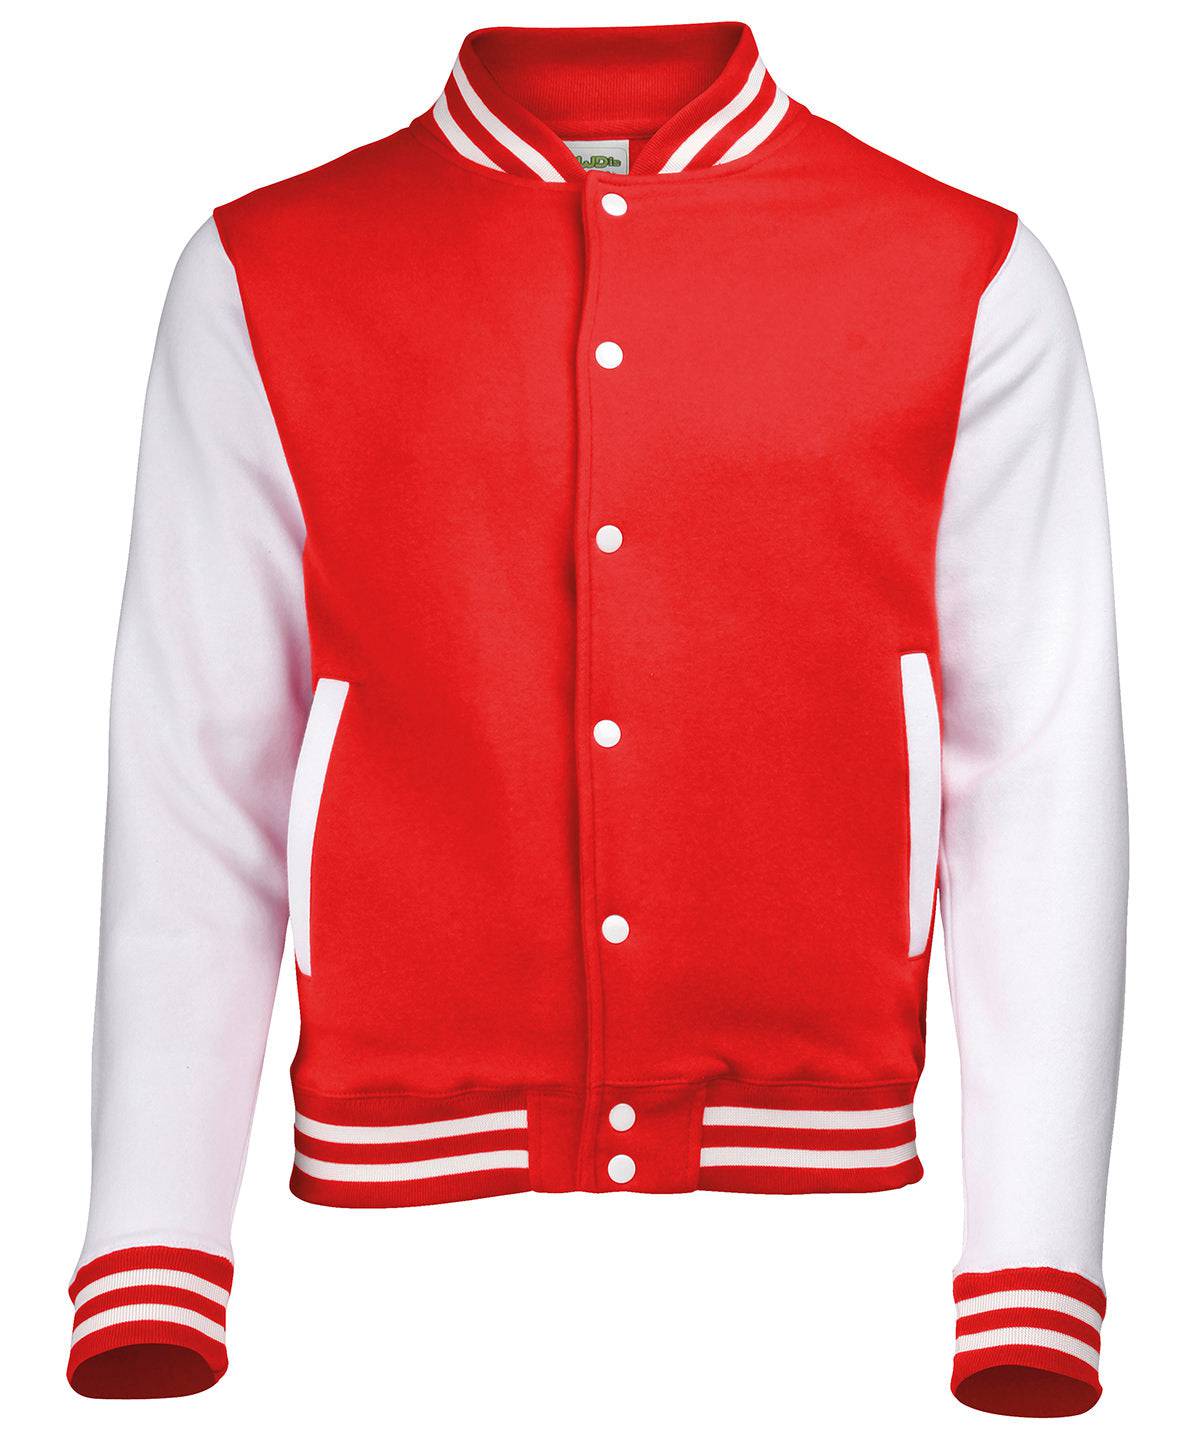 Fire Red/White* - Varsity jacket